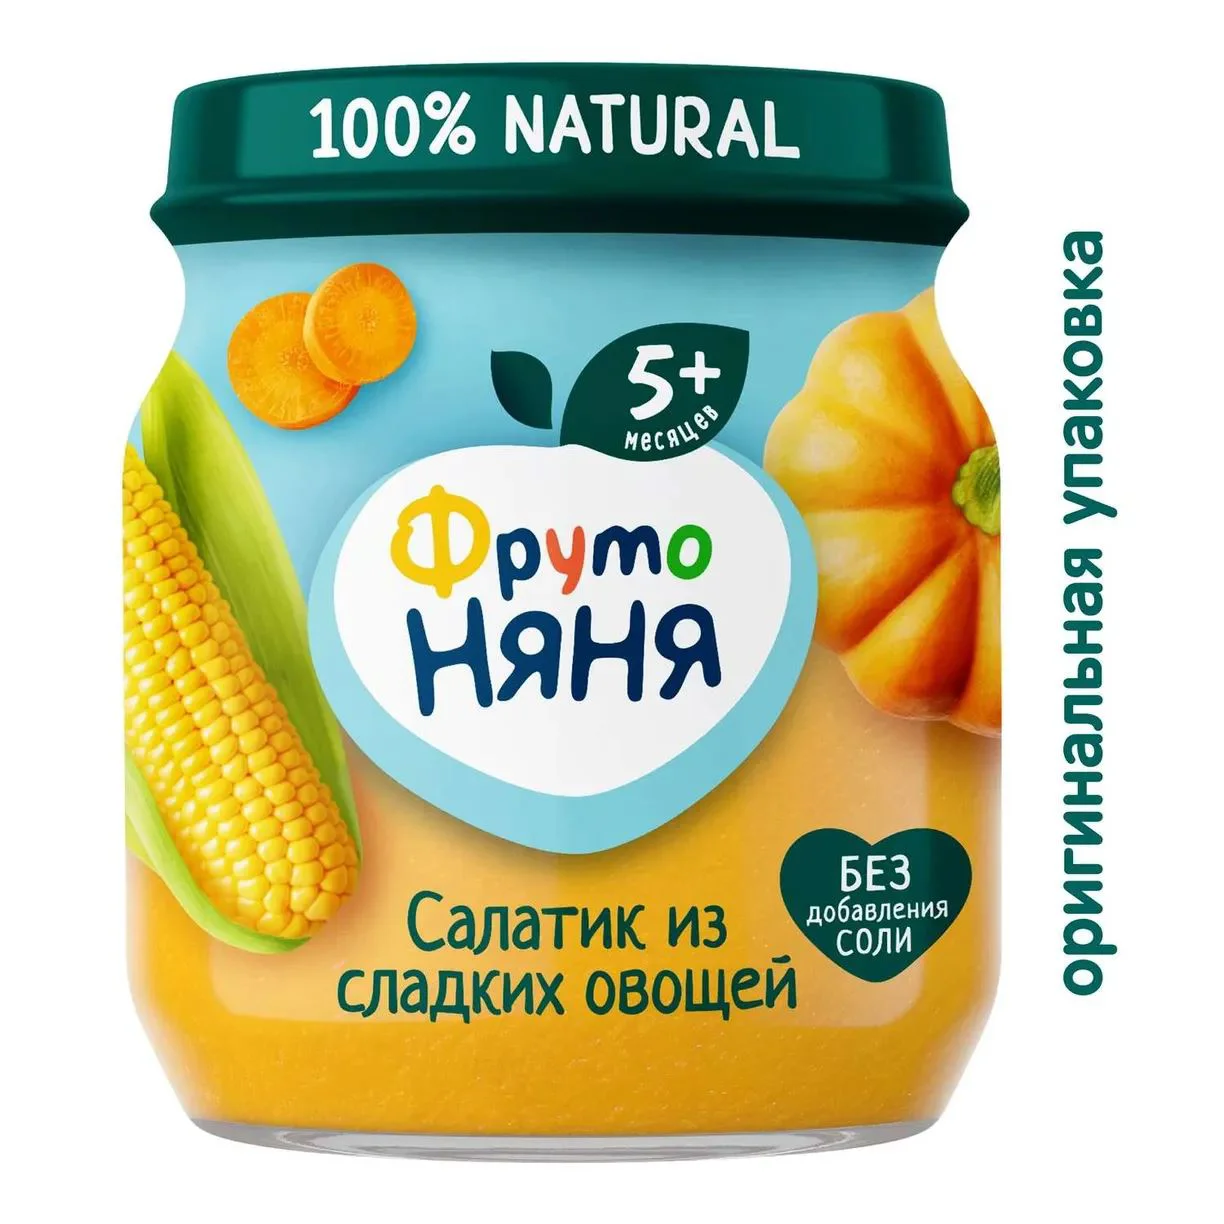 Piure ФрутоНяня Salata din legume dulci (5+ luni), 110 g